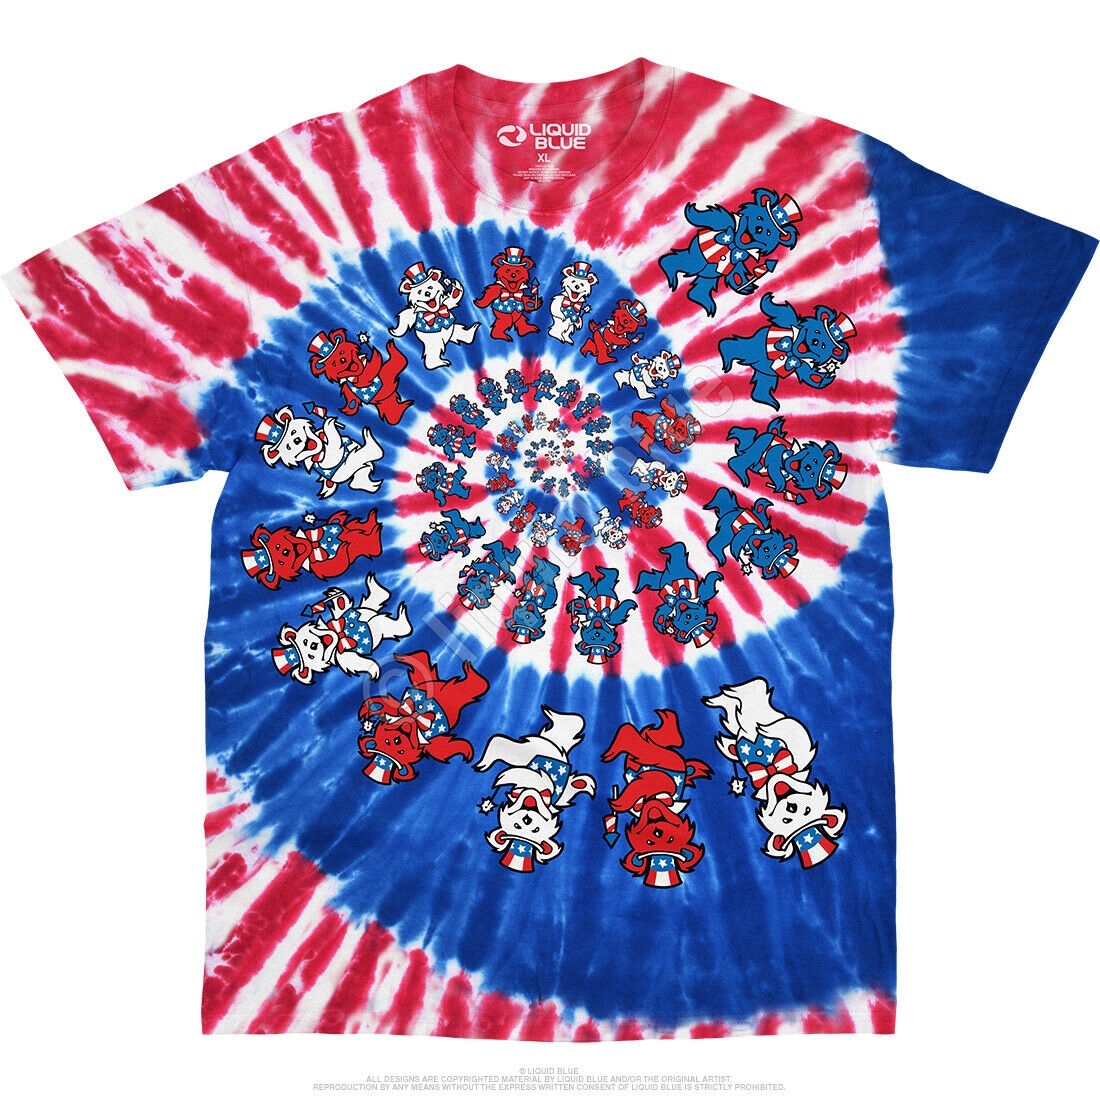 Grateful Dead Spiral Patriotic Bears Tie Dye Tshirt S M L Xl Xxl 3x 4x 5x 6x Xetsy